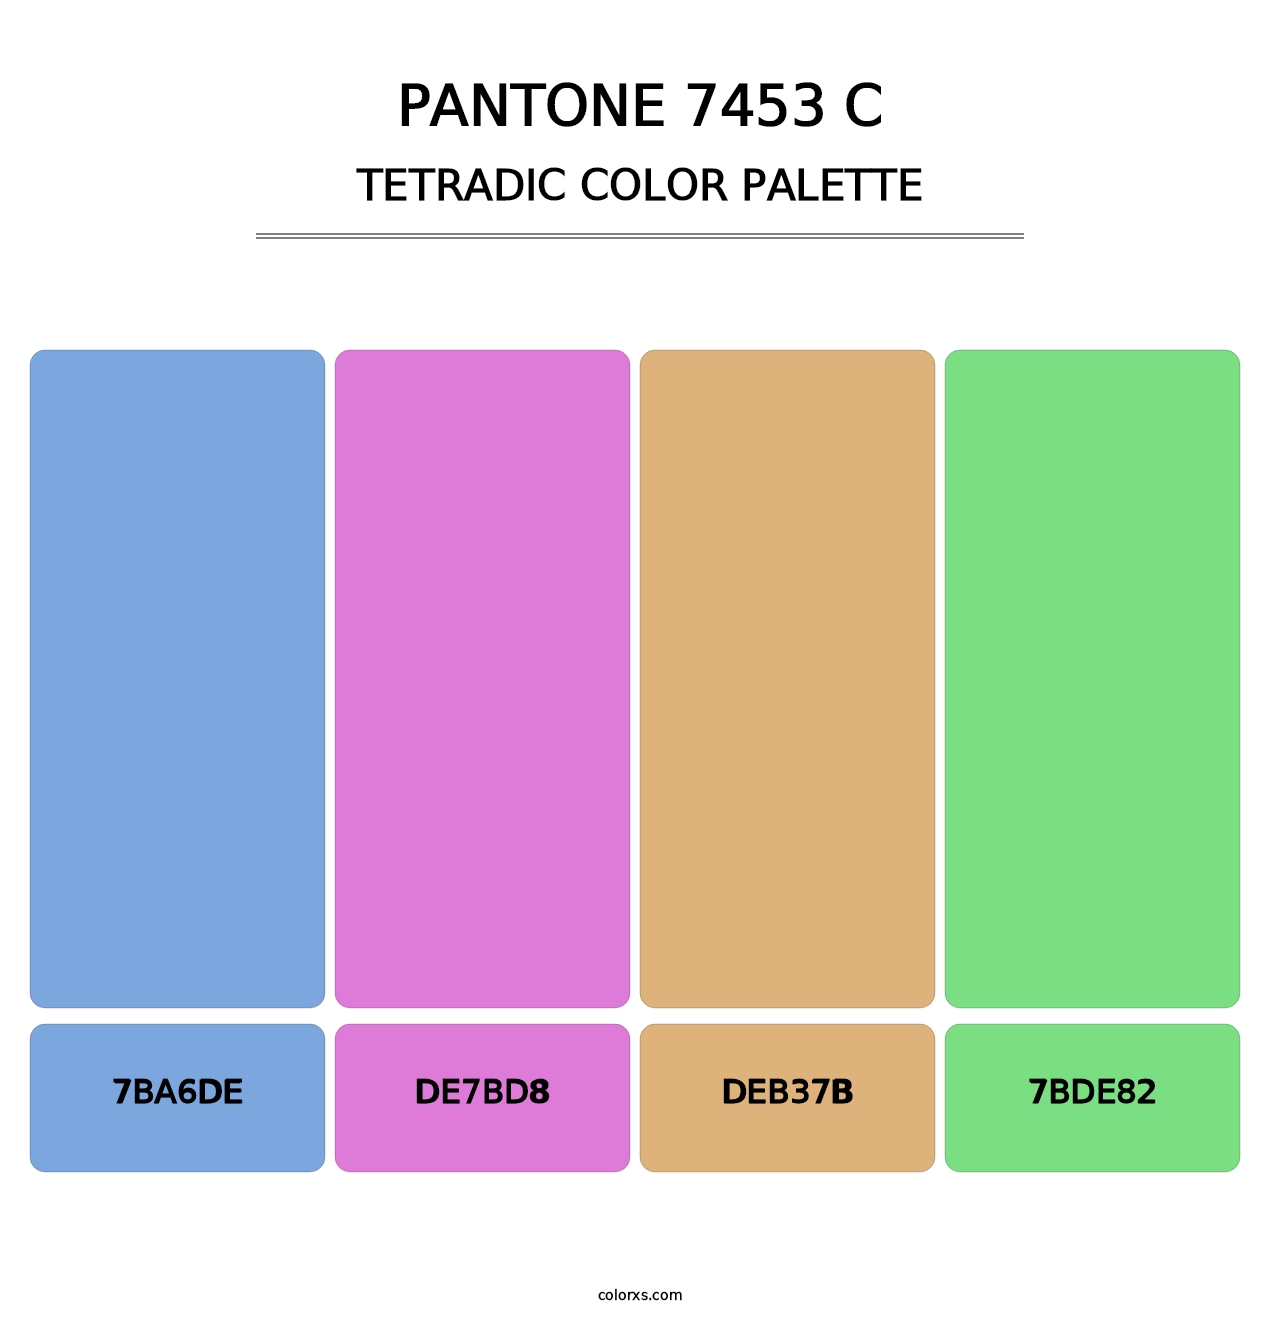 PANTONE 7453 C - Tetradic Color Palette